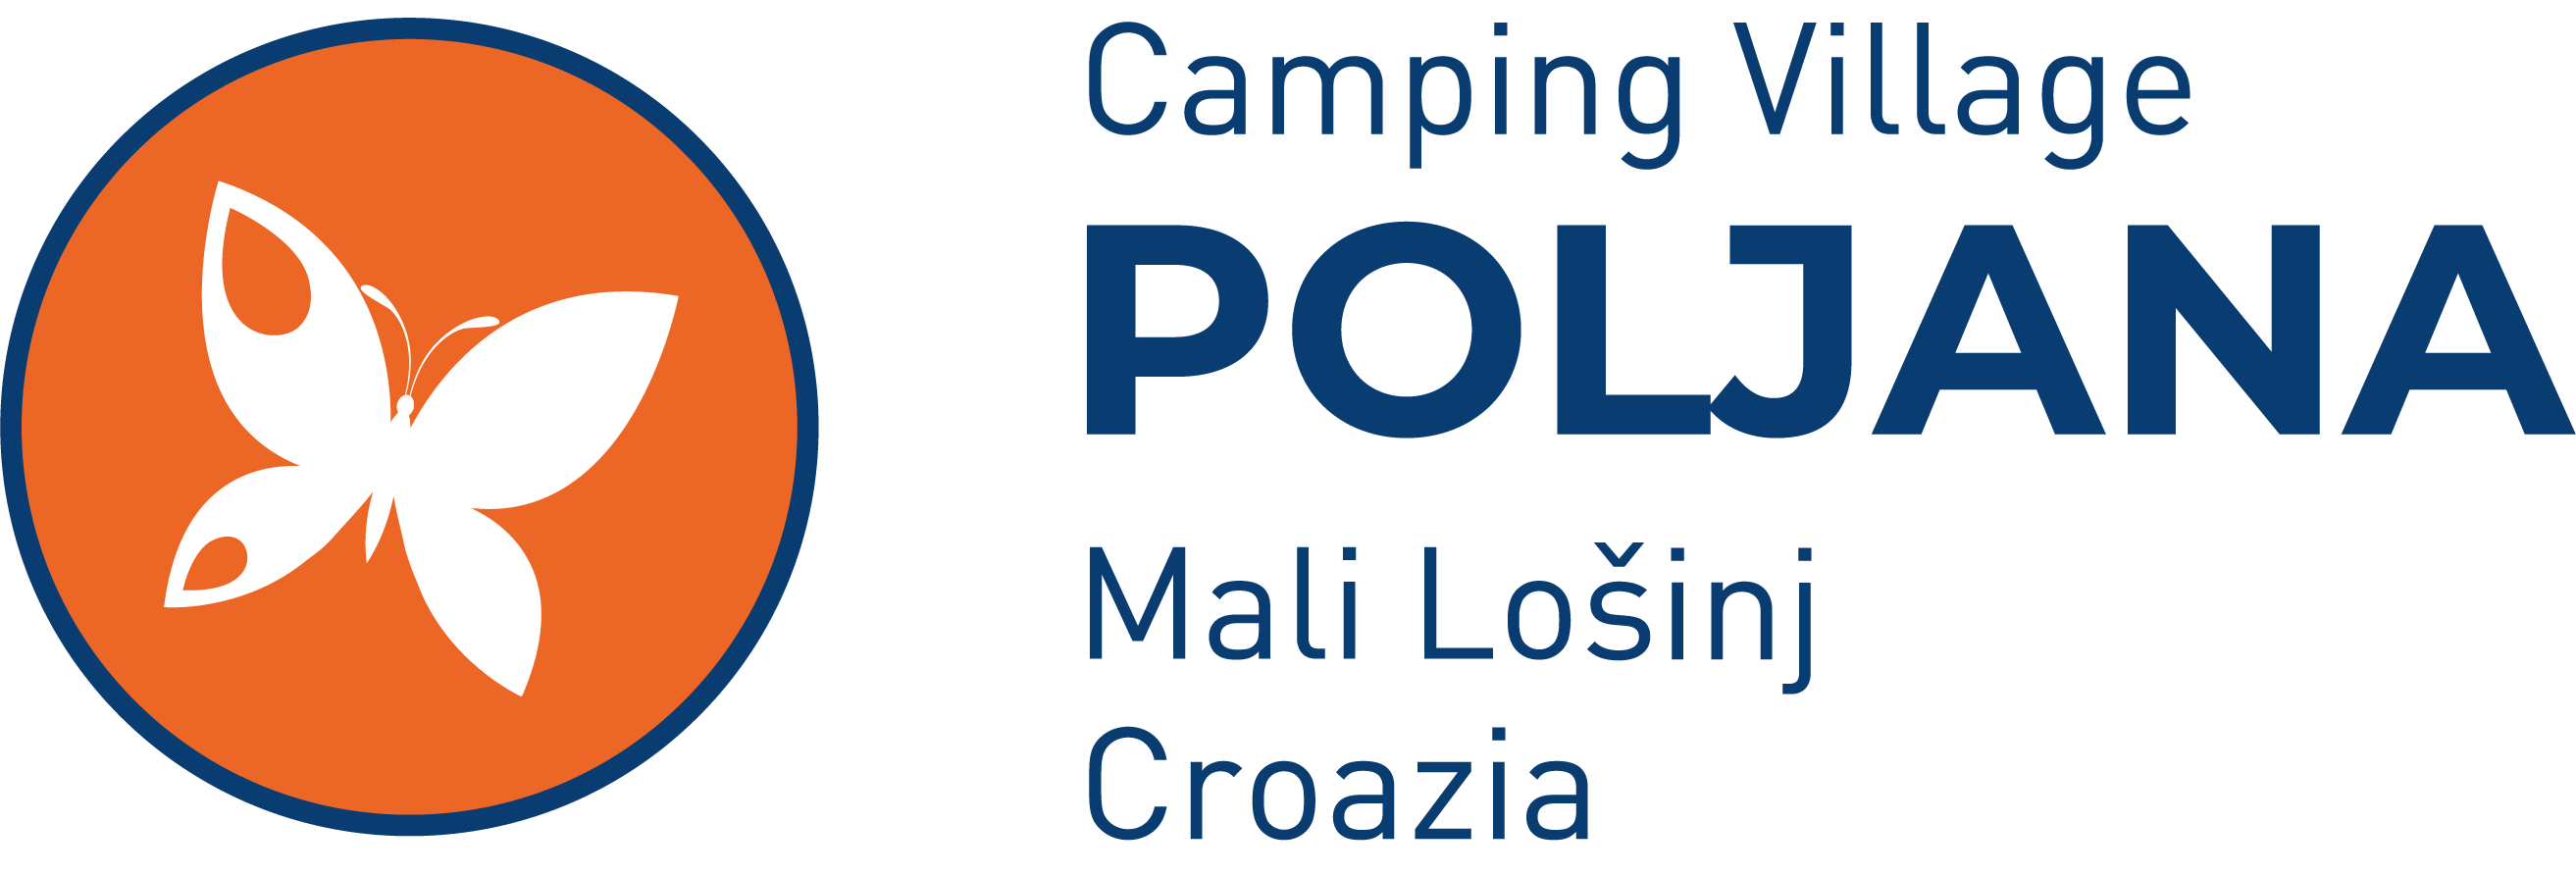 Camping Village Poljana